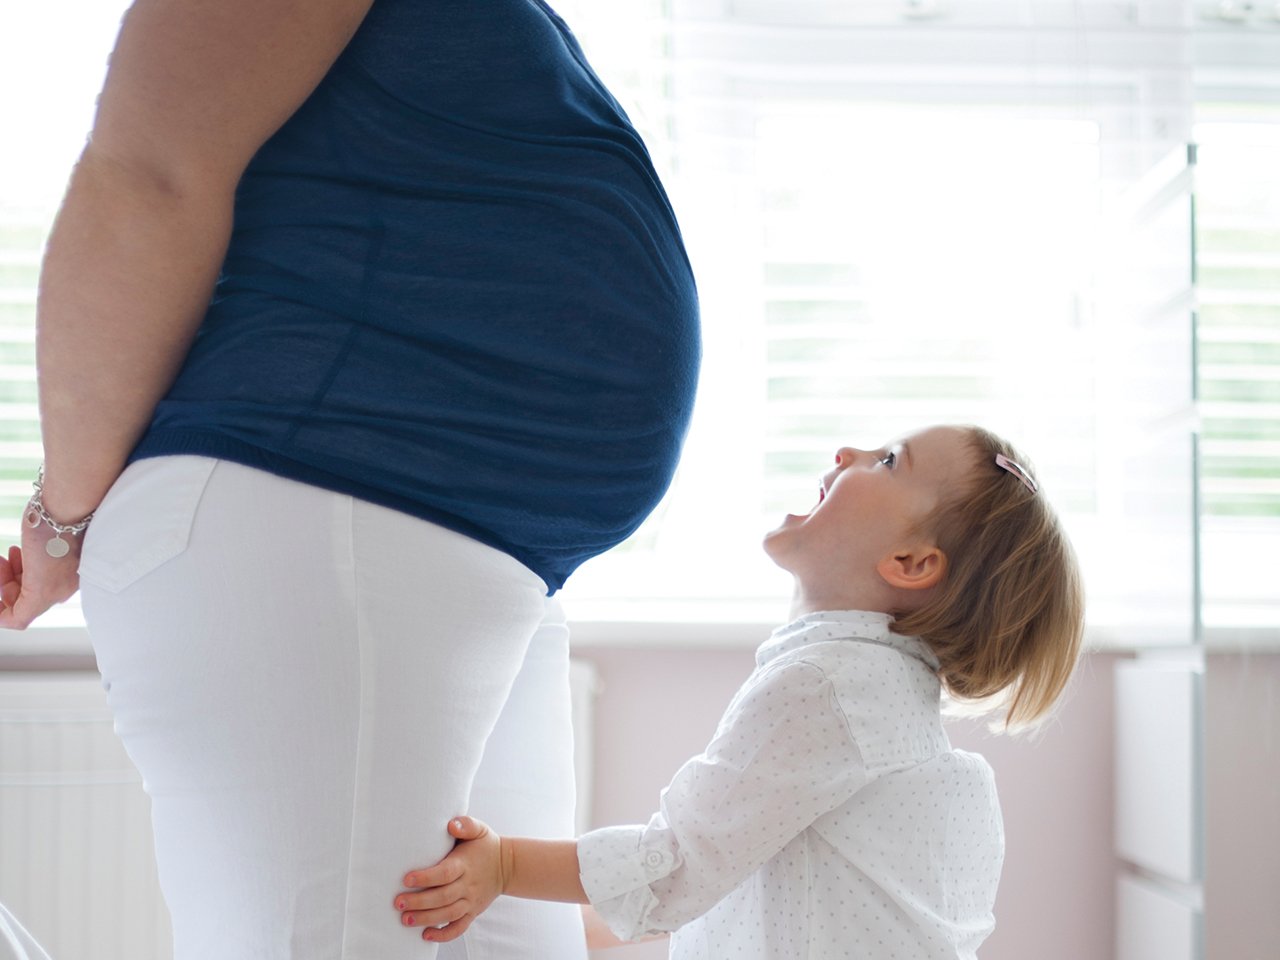 plus-size pregnancy